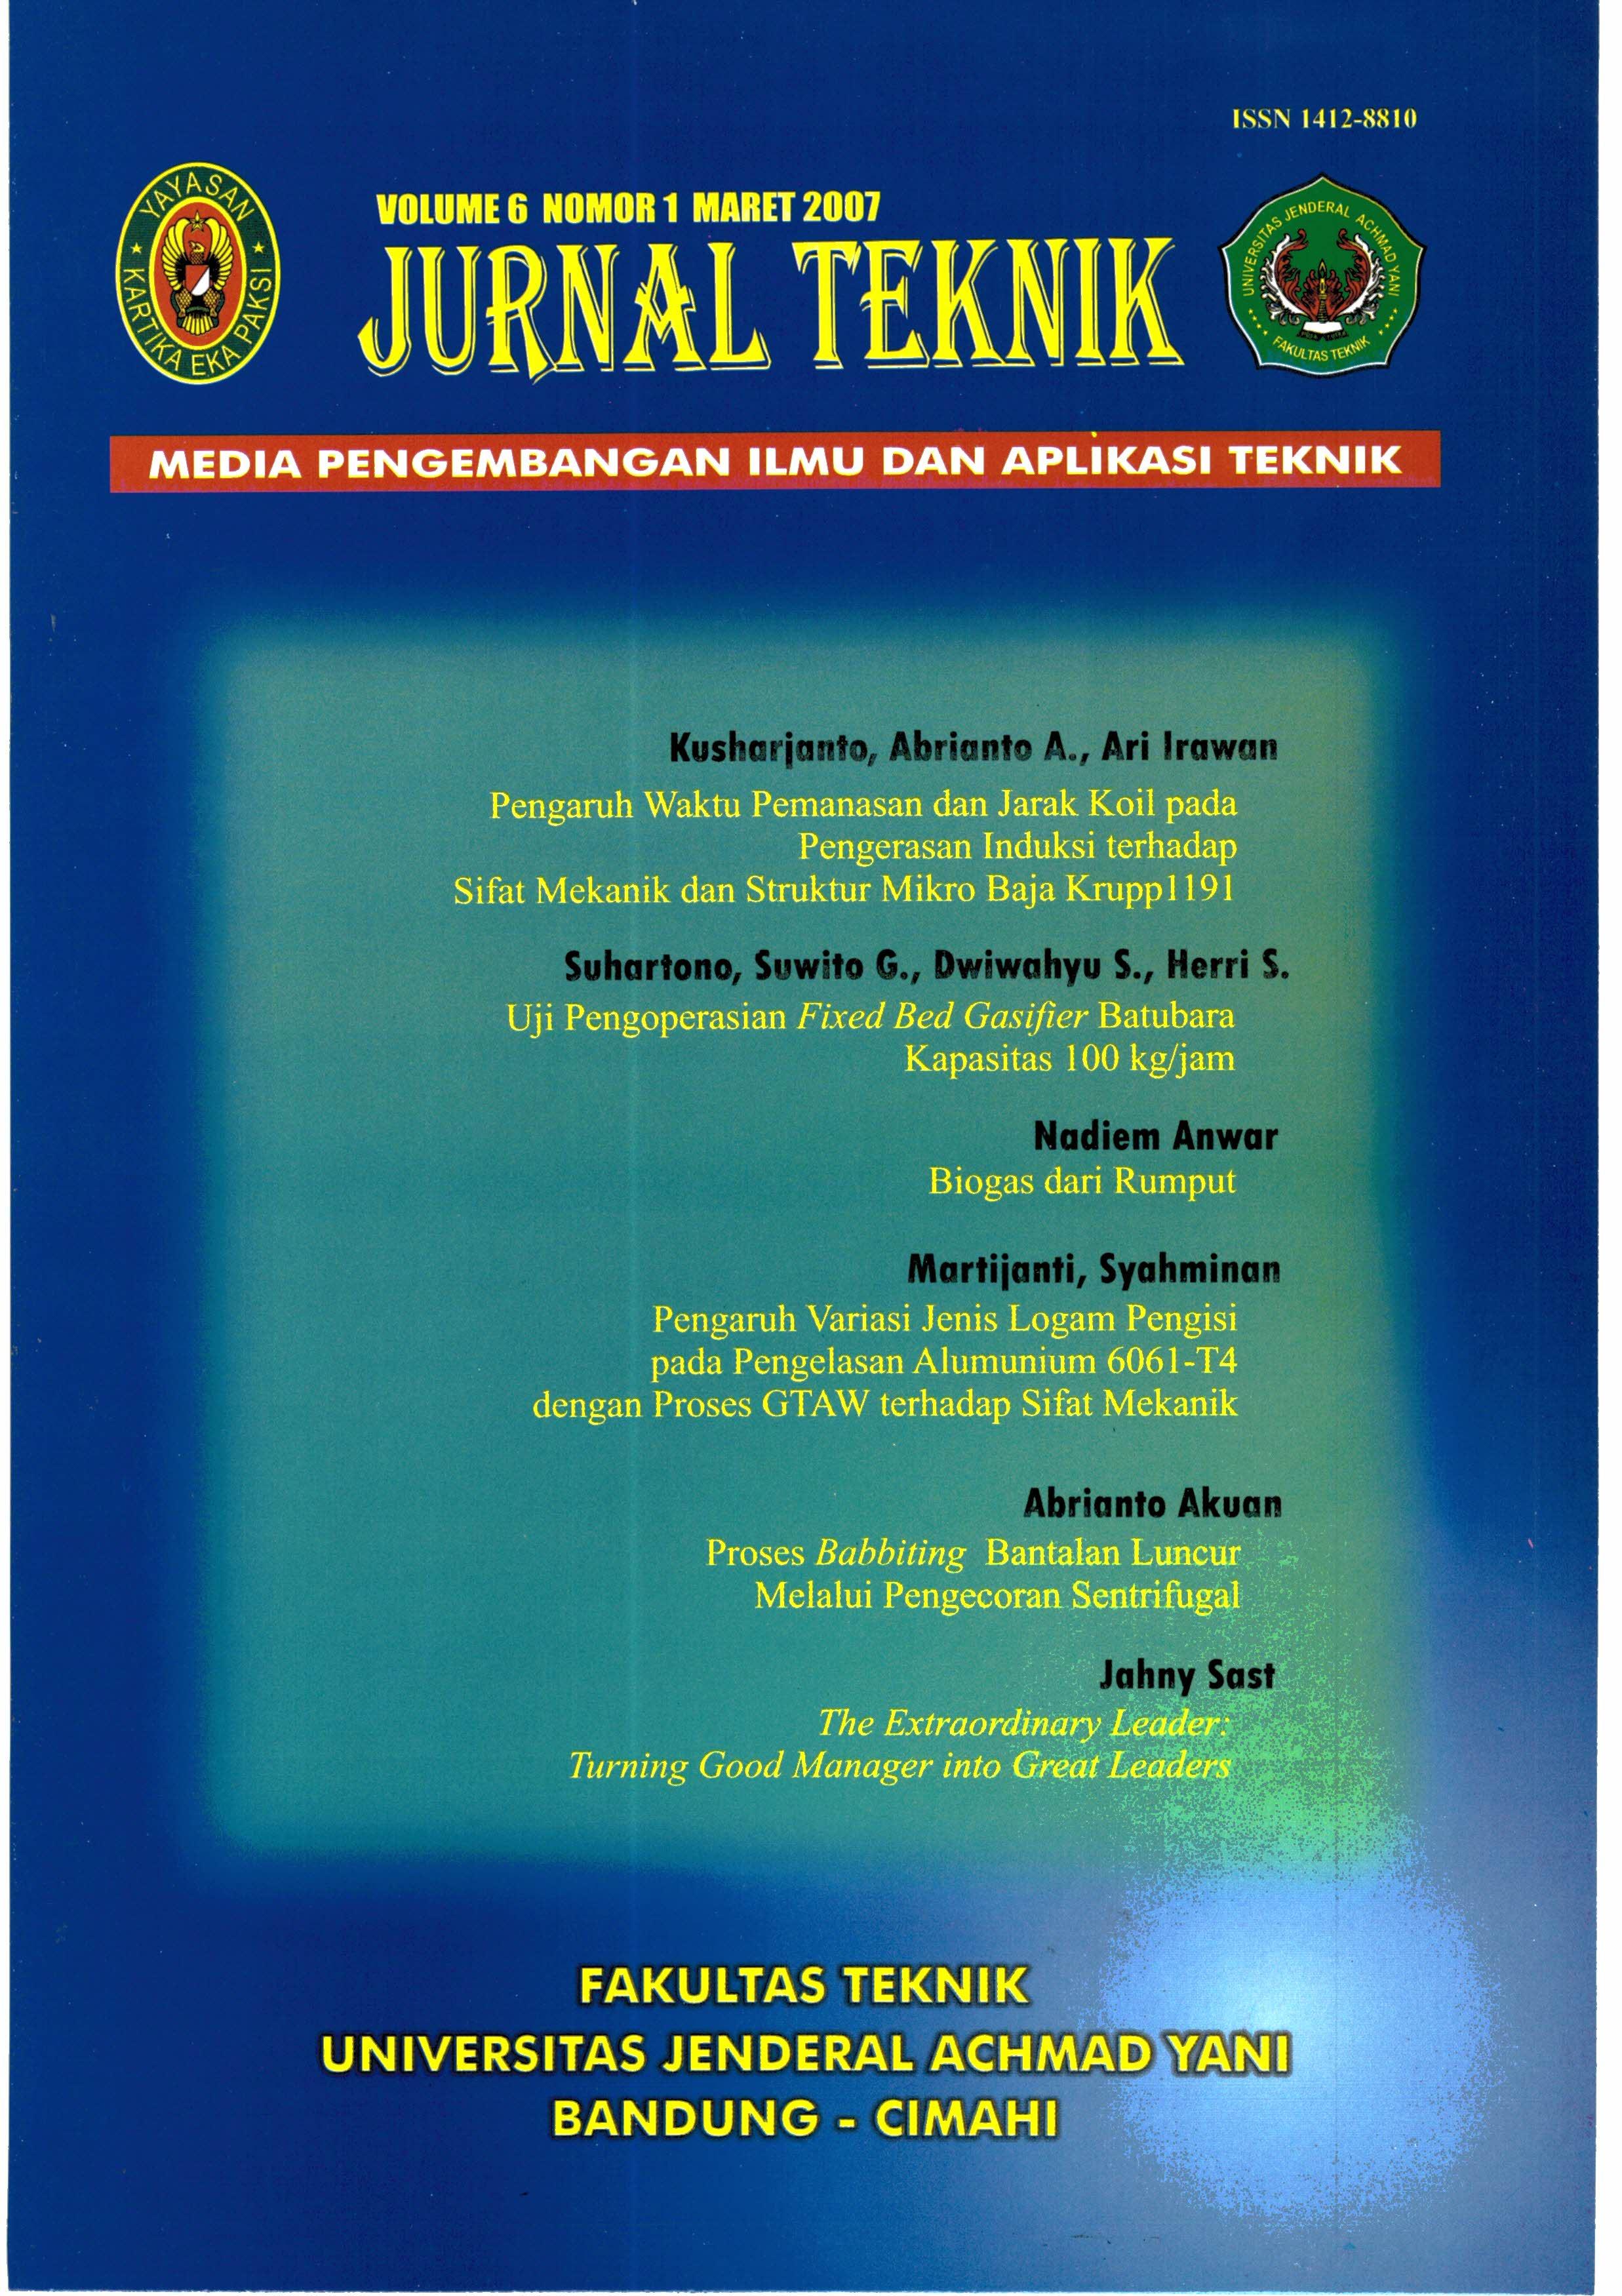 					View Vol. 6 No. 1 (2007): Jurnal Teknik - Media Pengembangan Ilmu dan Aplikasi Teknik
				